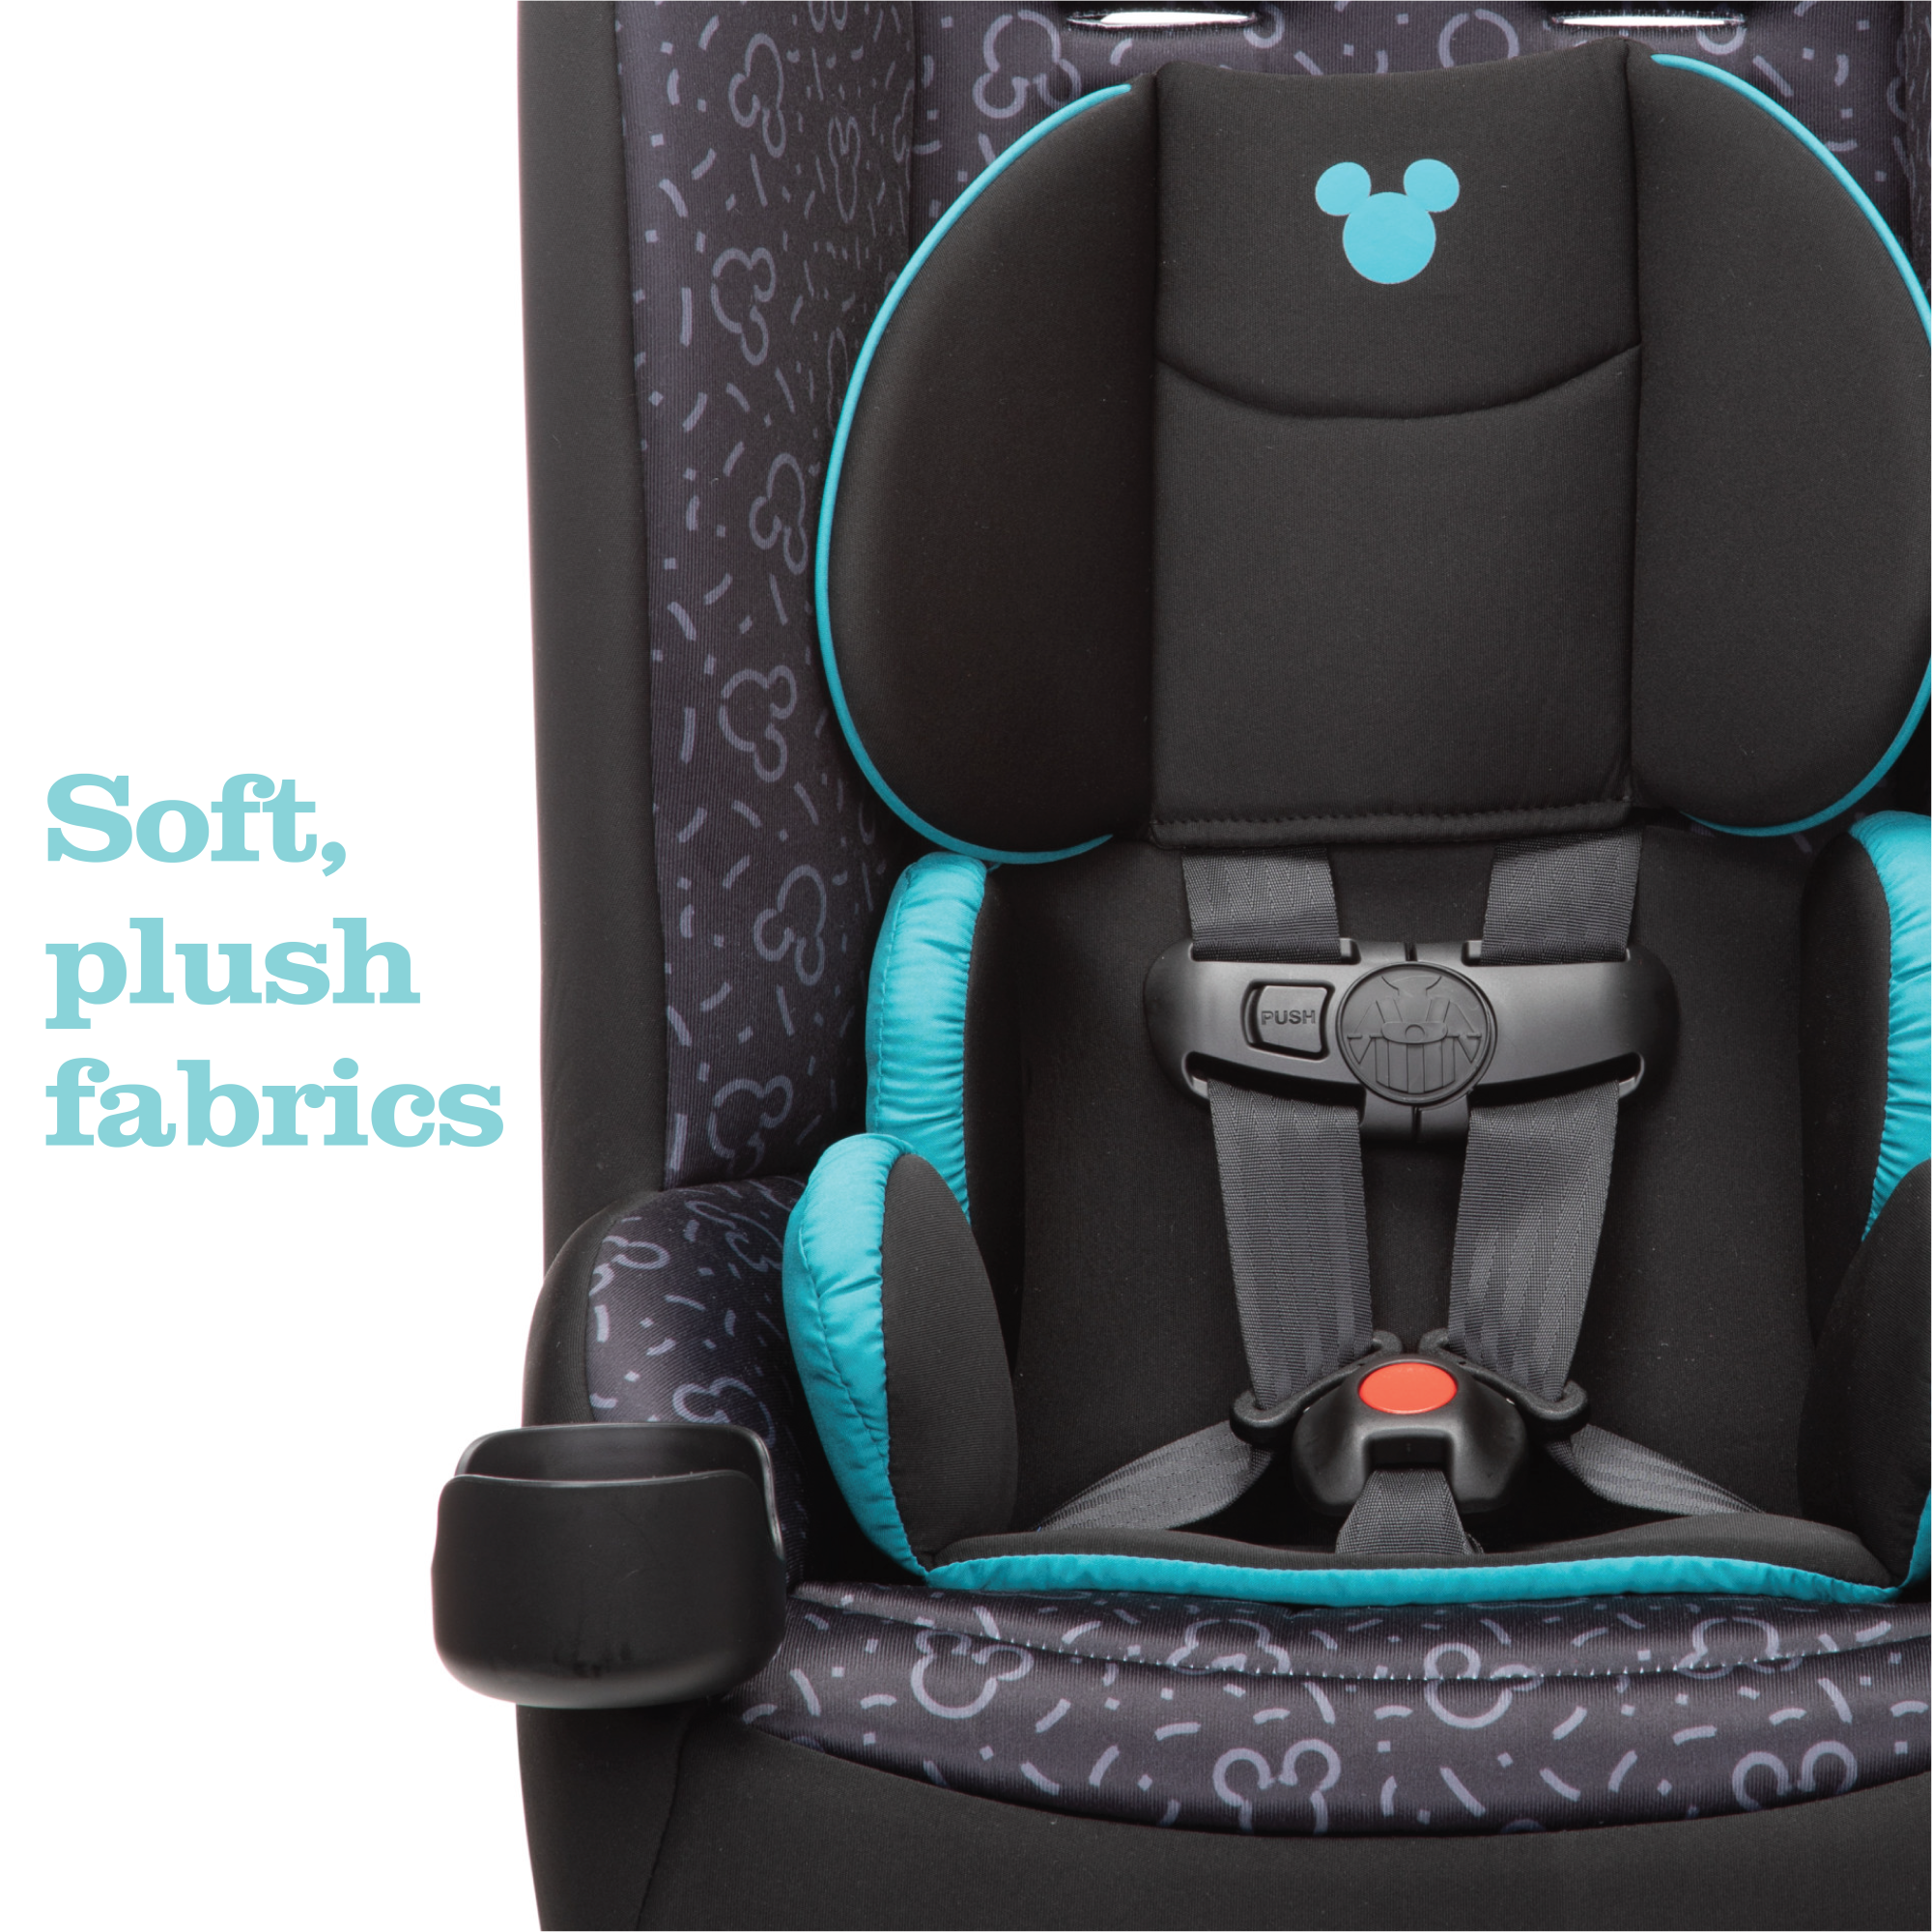 Disney Baby Jive 2-in-1 Convertible Car Seat - soft, plush fabrics